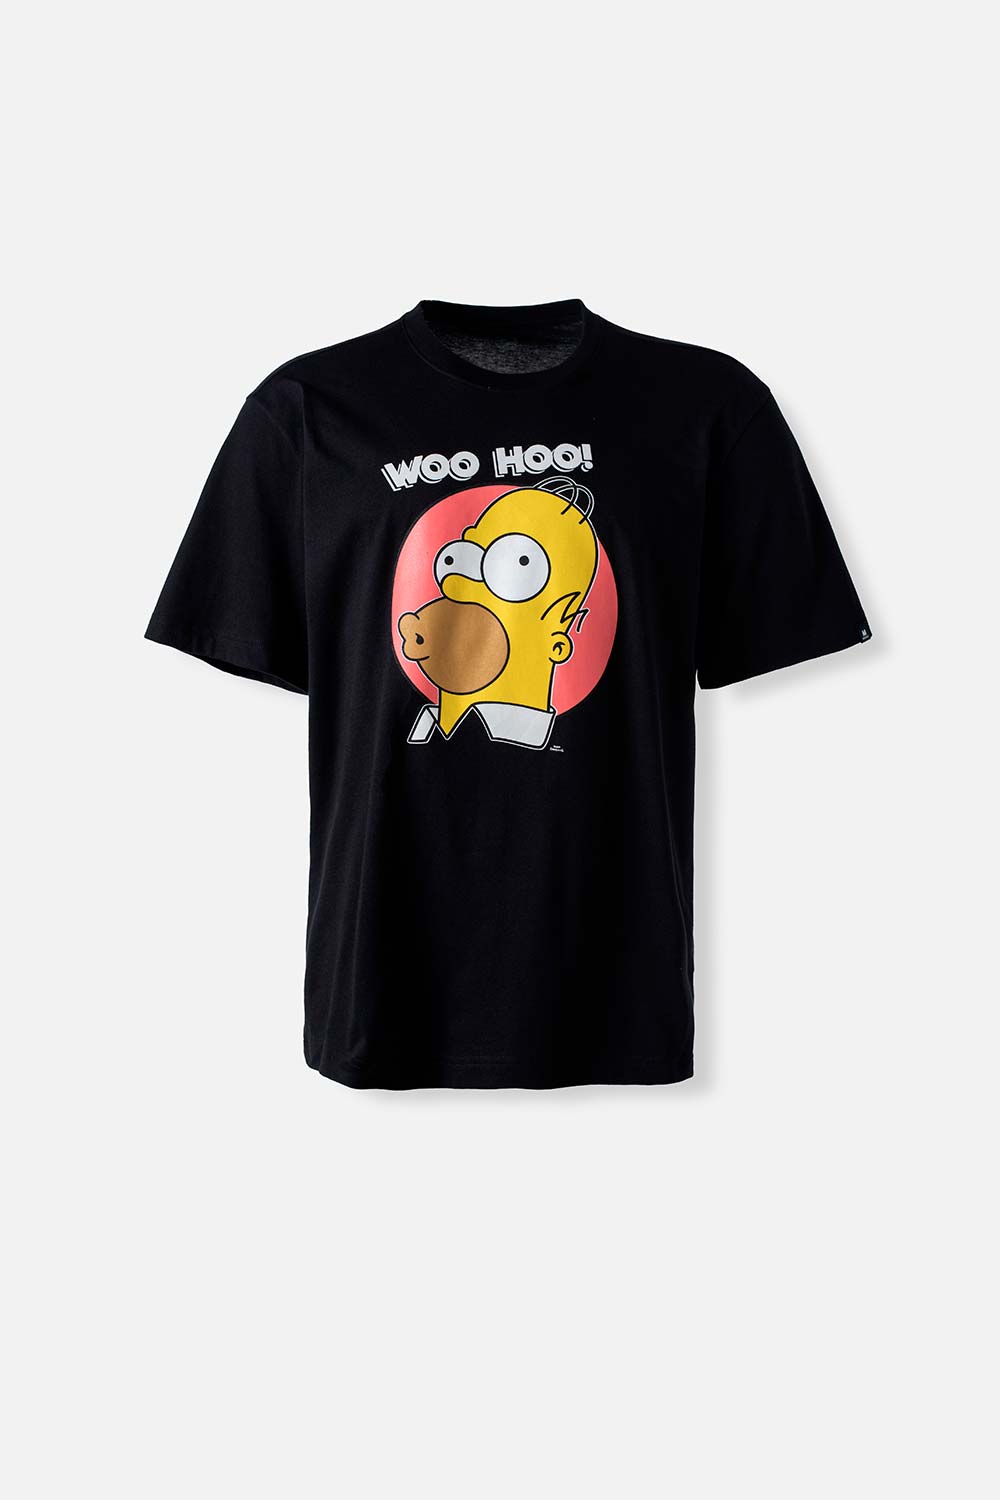 Camiseta de Simpsons manga corta negra para hombre S-0